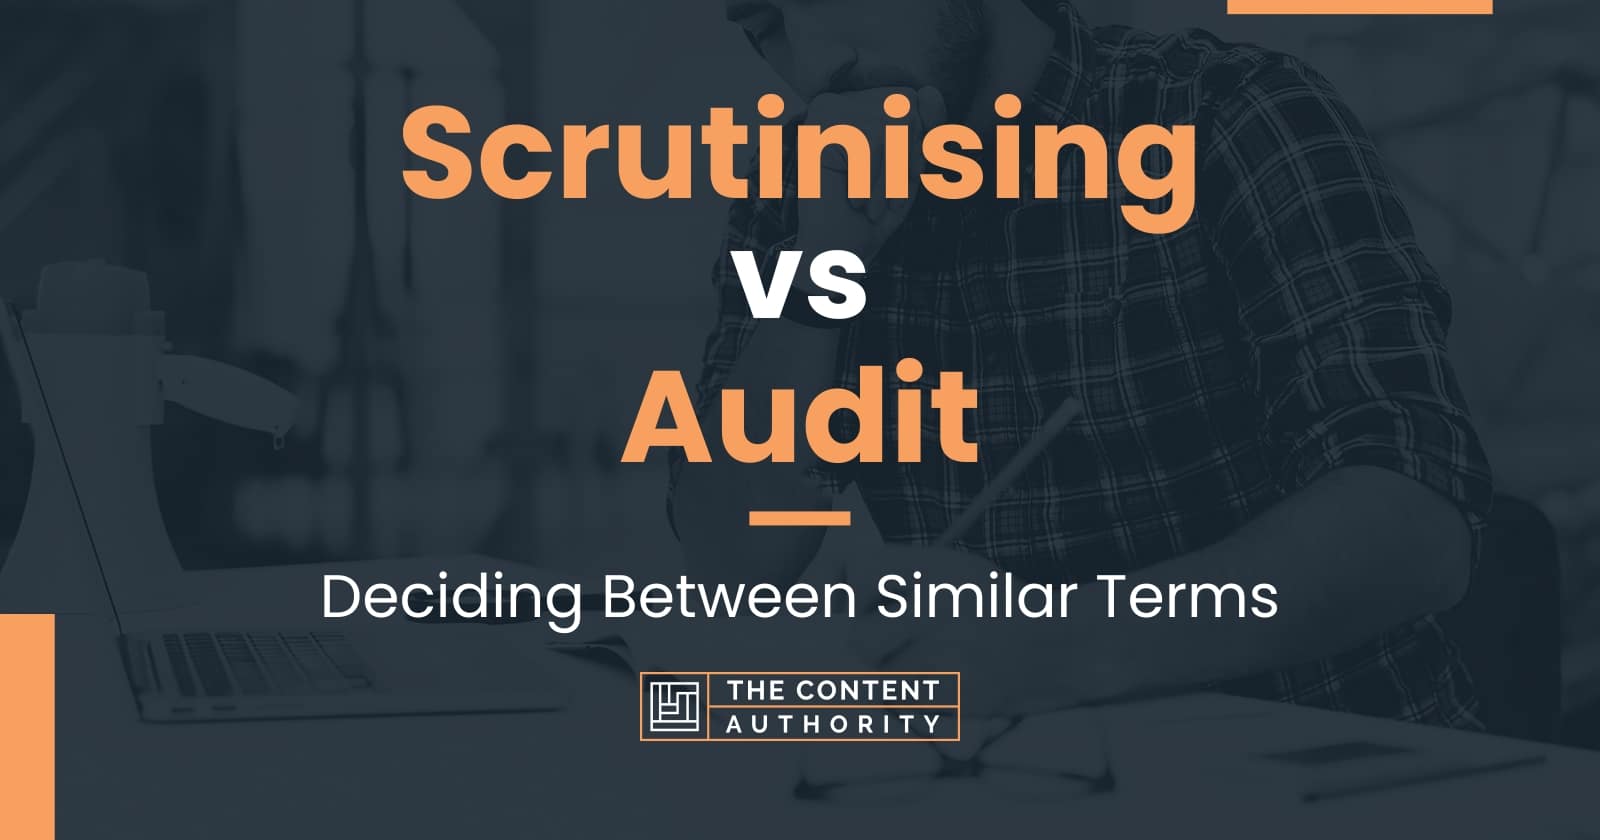 Scrutinising vs Audit: Deciding Between Similar Terms